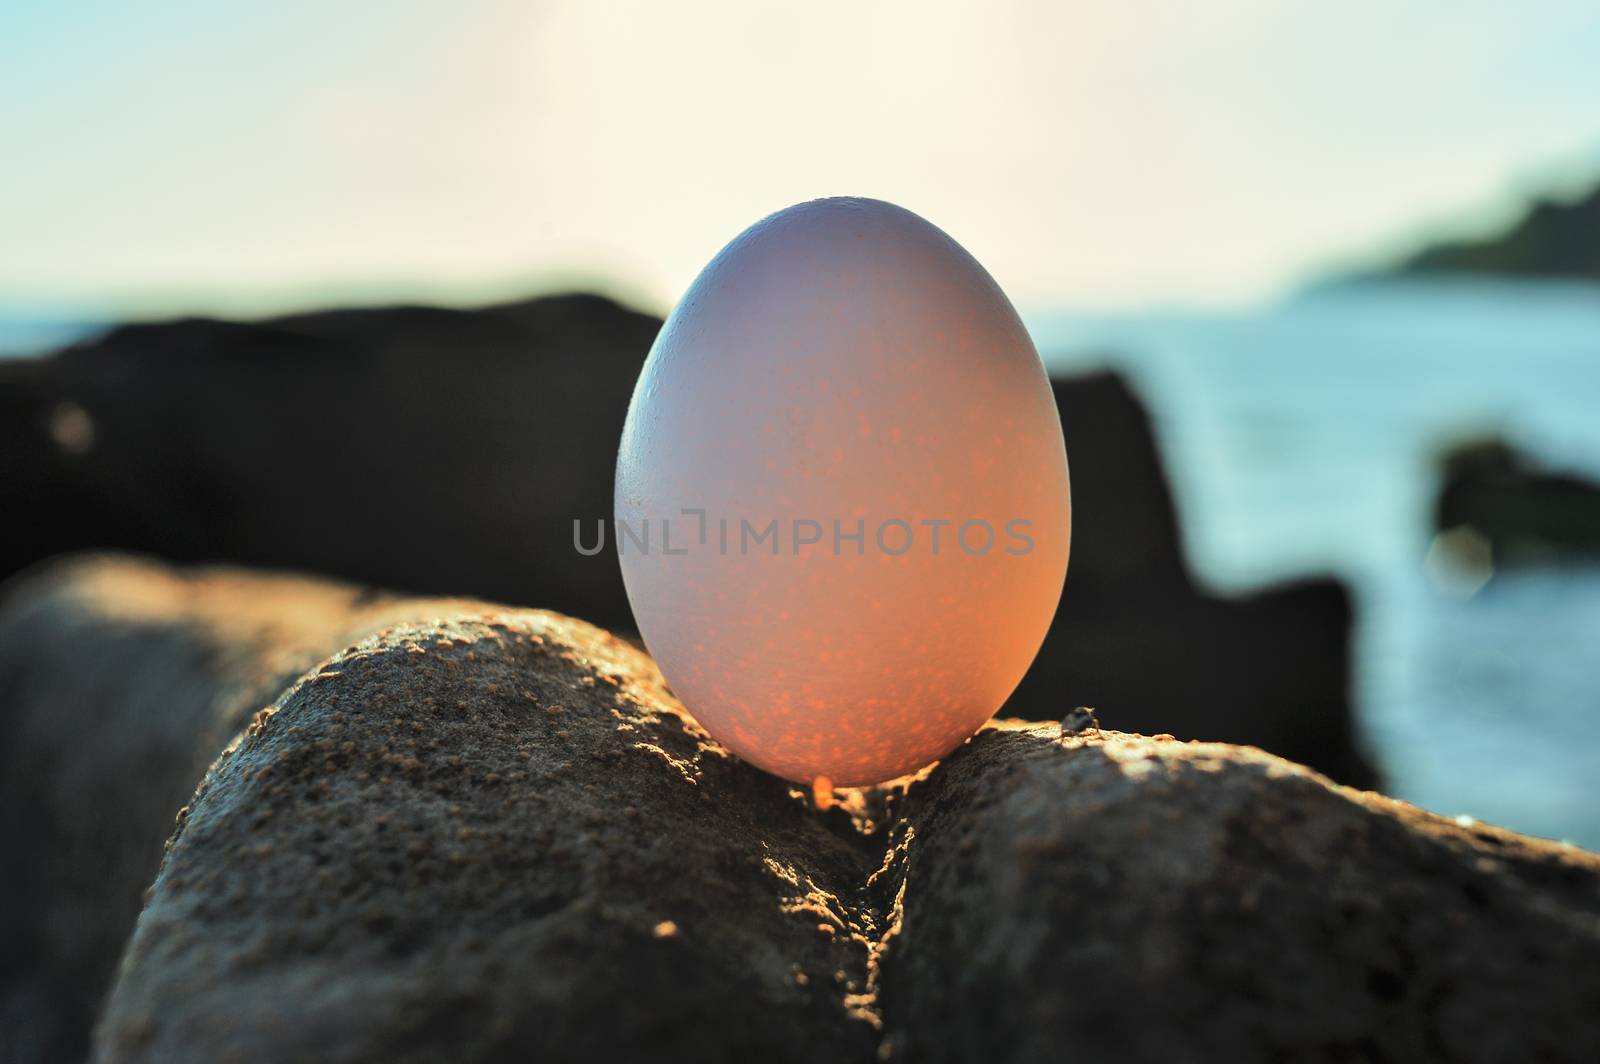 Hen's egg on the boulder on the seashore